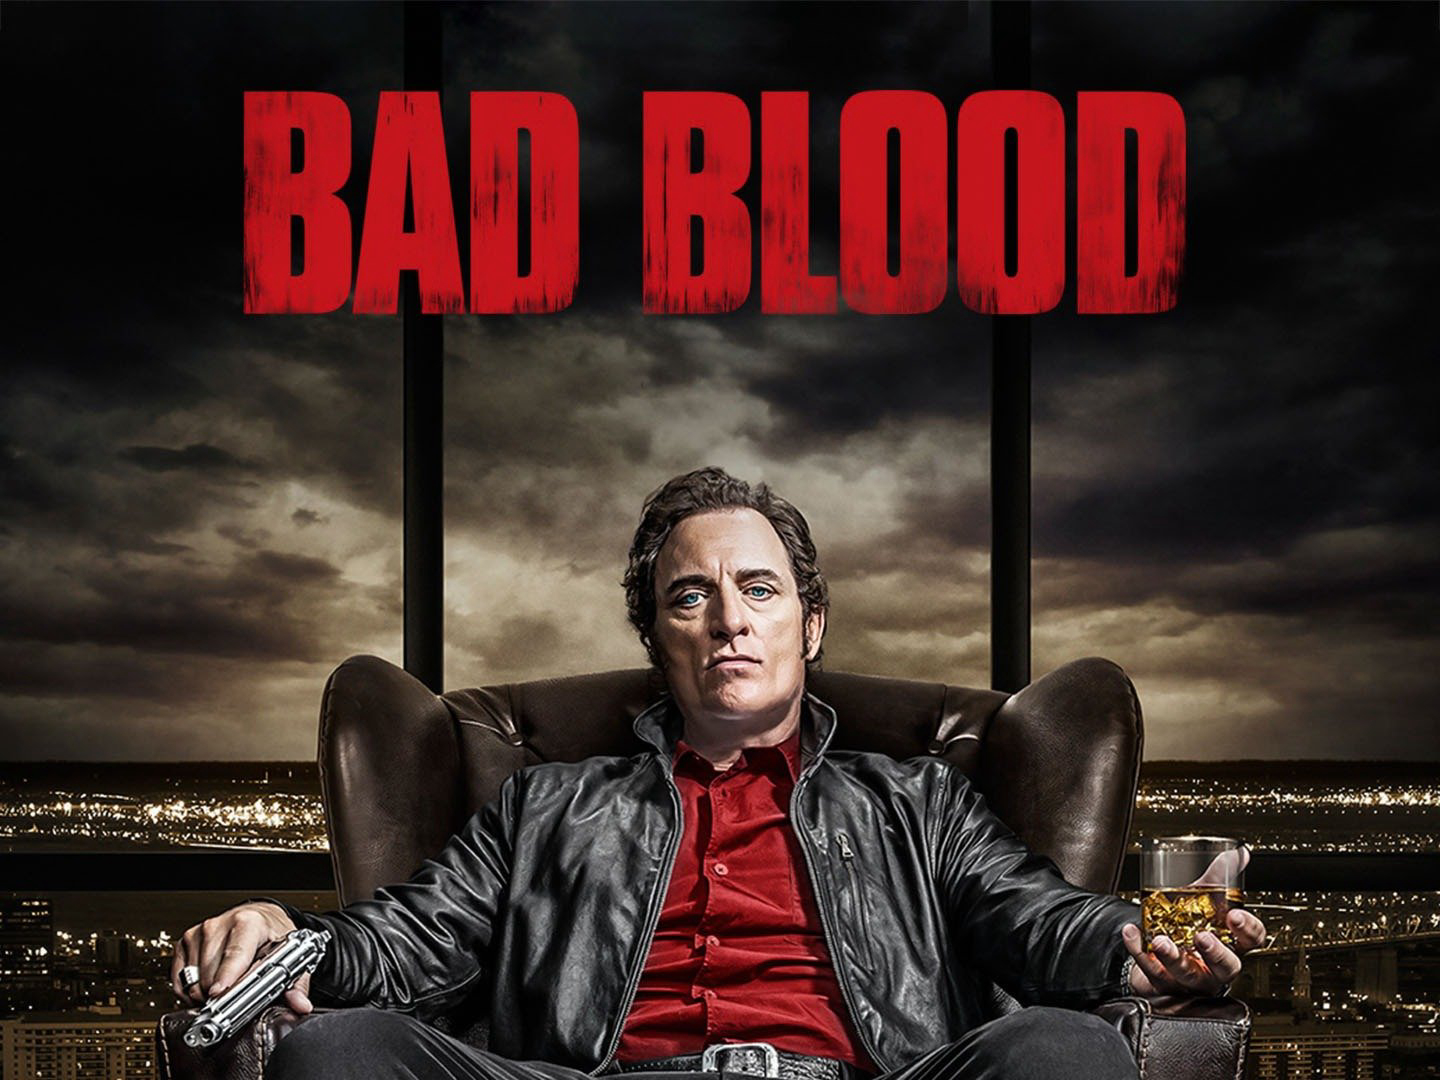 Oán hận (Phân 2) - Bad Blood (Season 2) (2019)